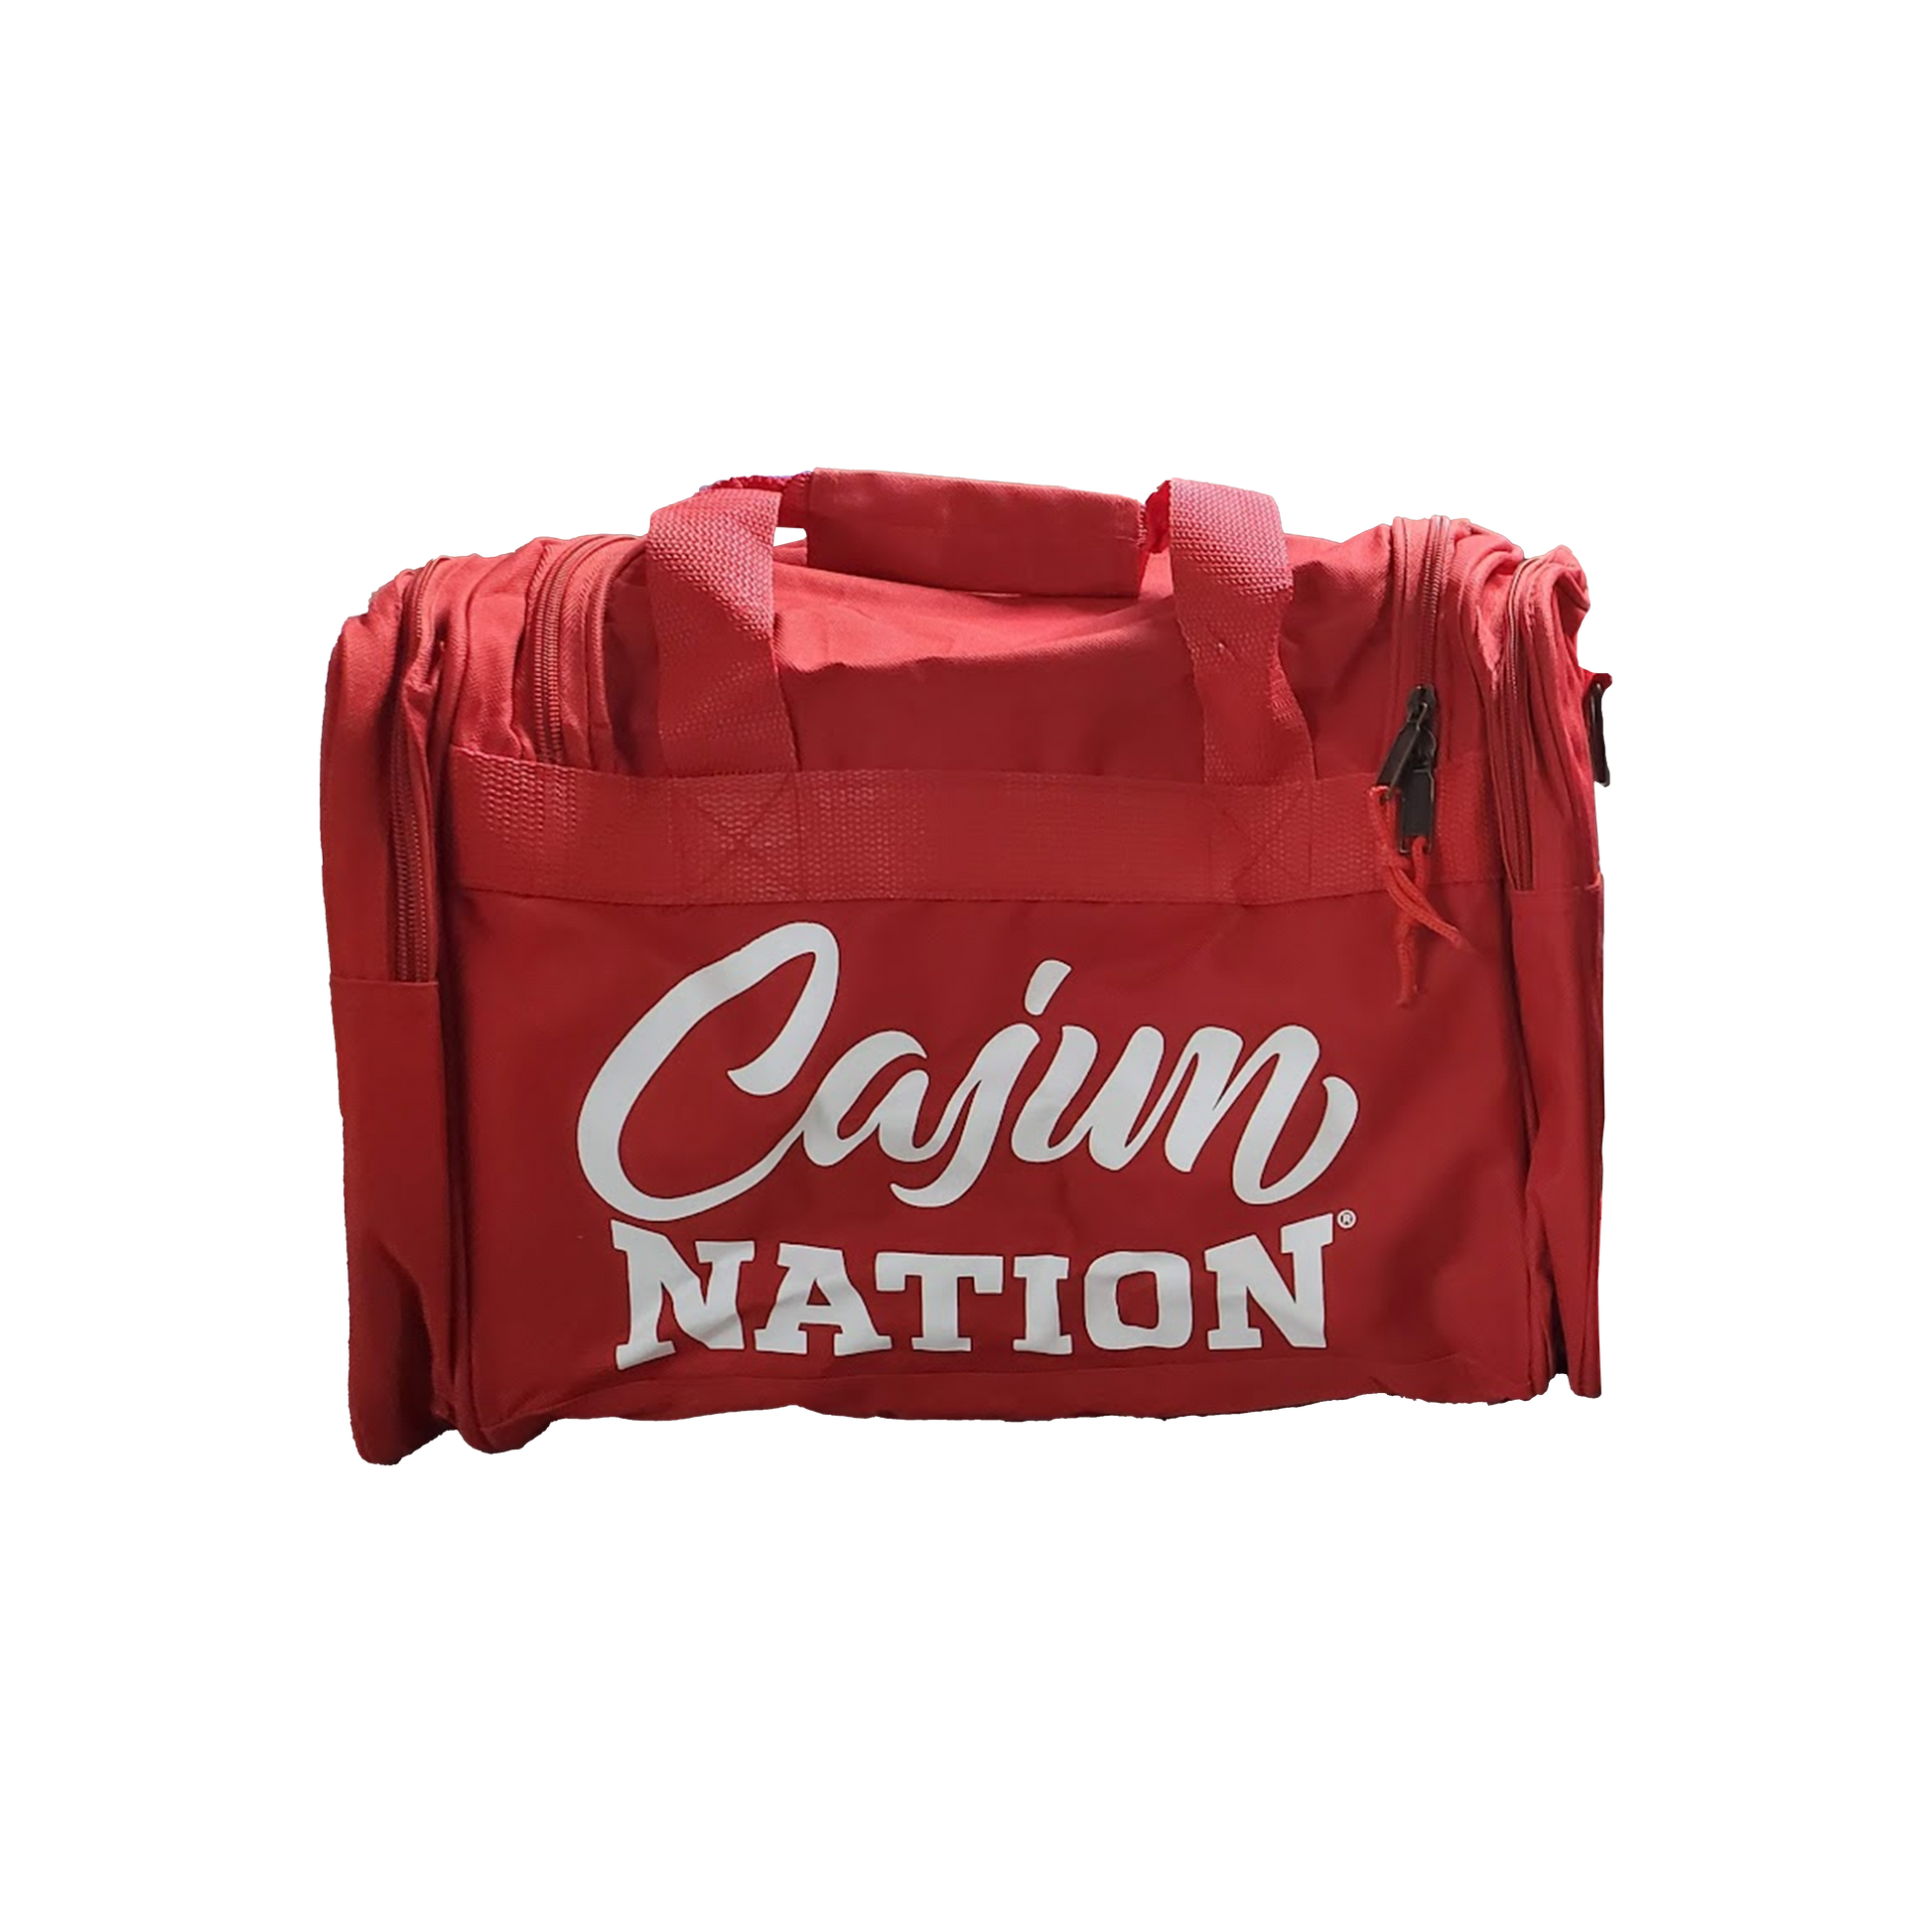 Cajun Nation Duffel Bag Material: 600D polyester w/heavy vinyl backing Adjustable shoulder strap Color: Red Front pocket Dimensions:  18” W x 10” H x 10” D